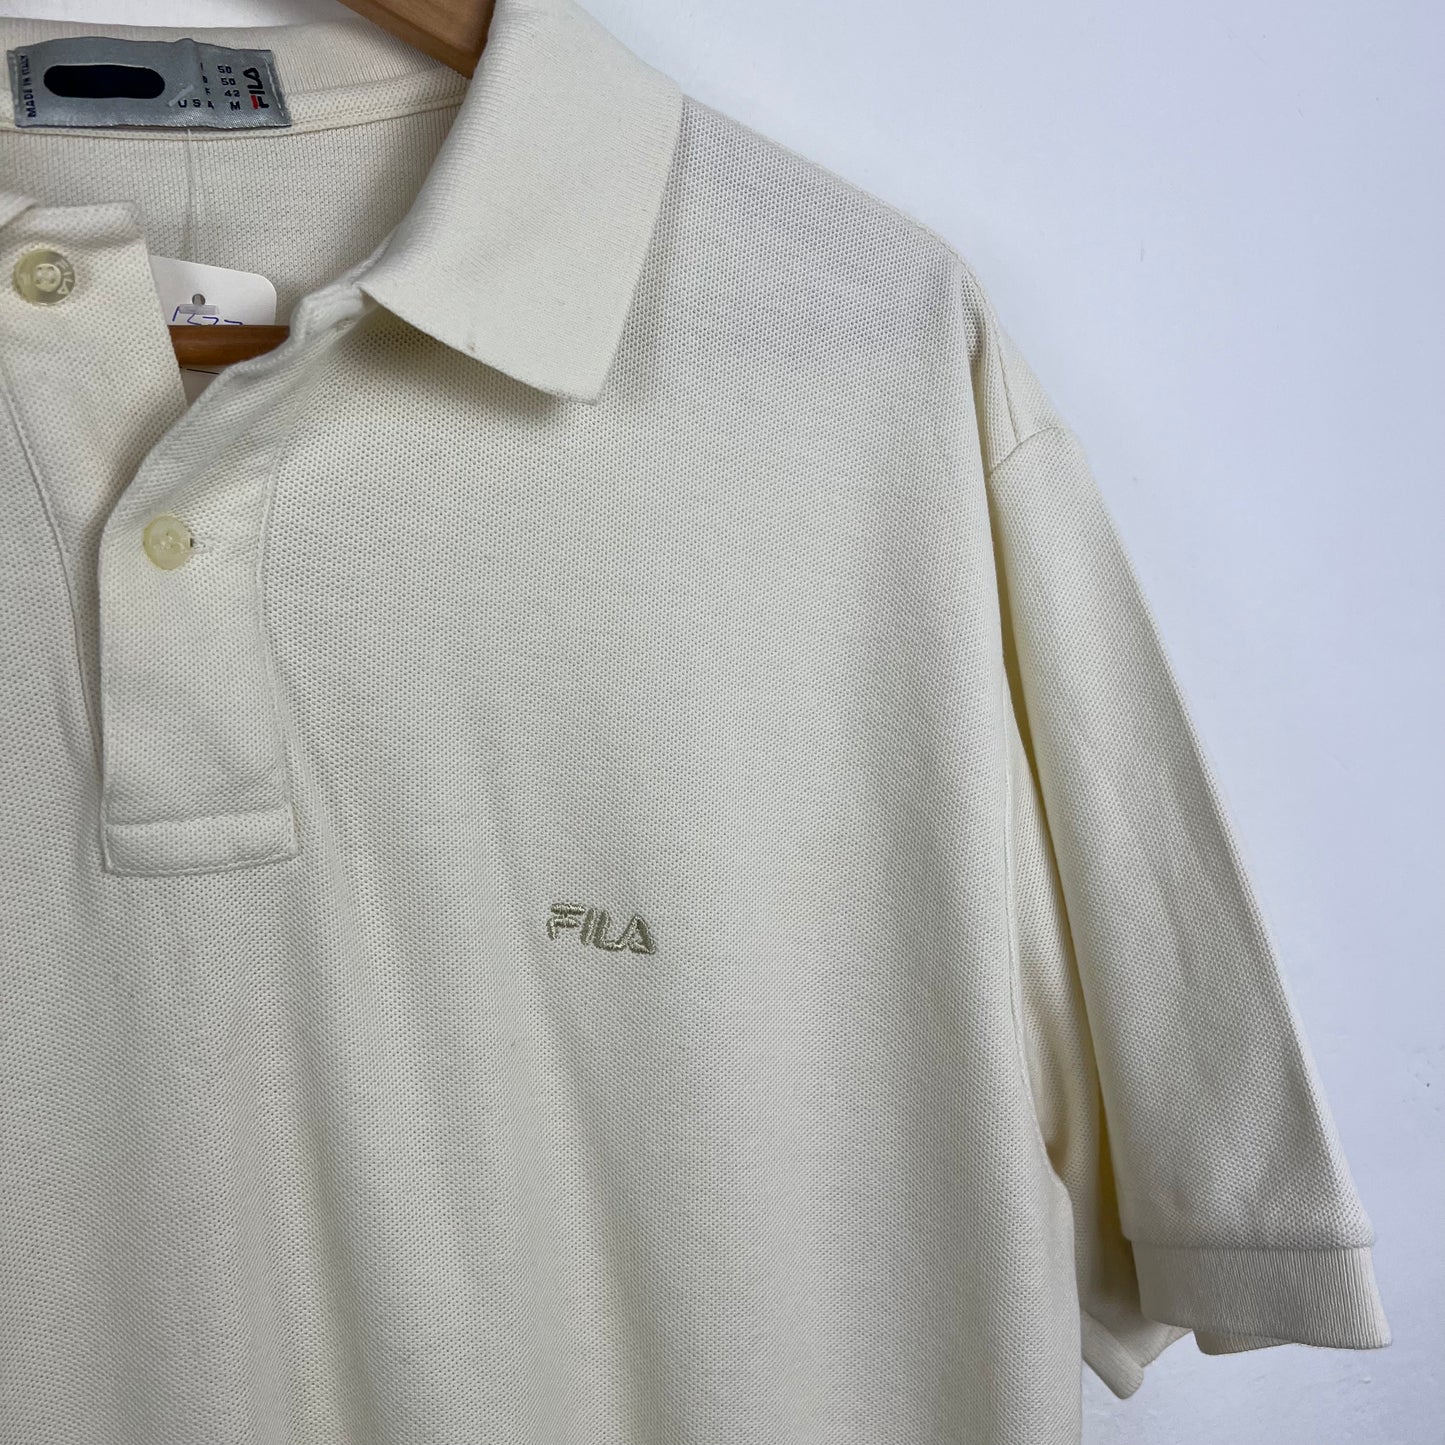 Fila polo shirt medium